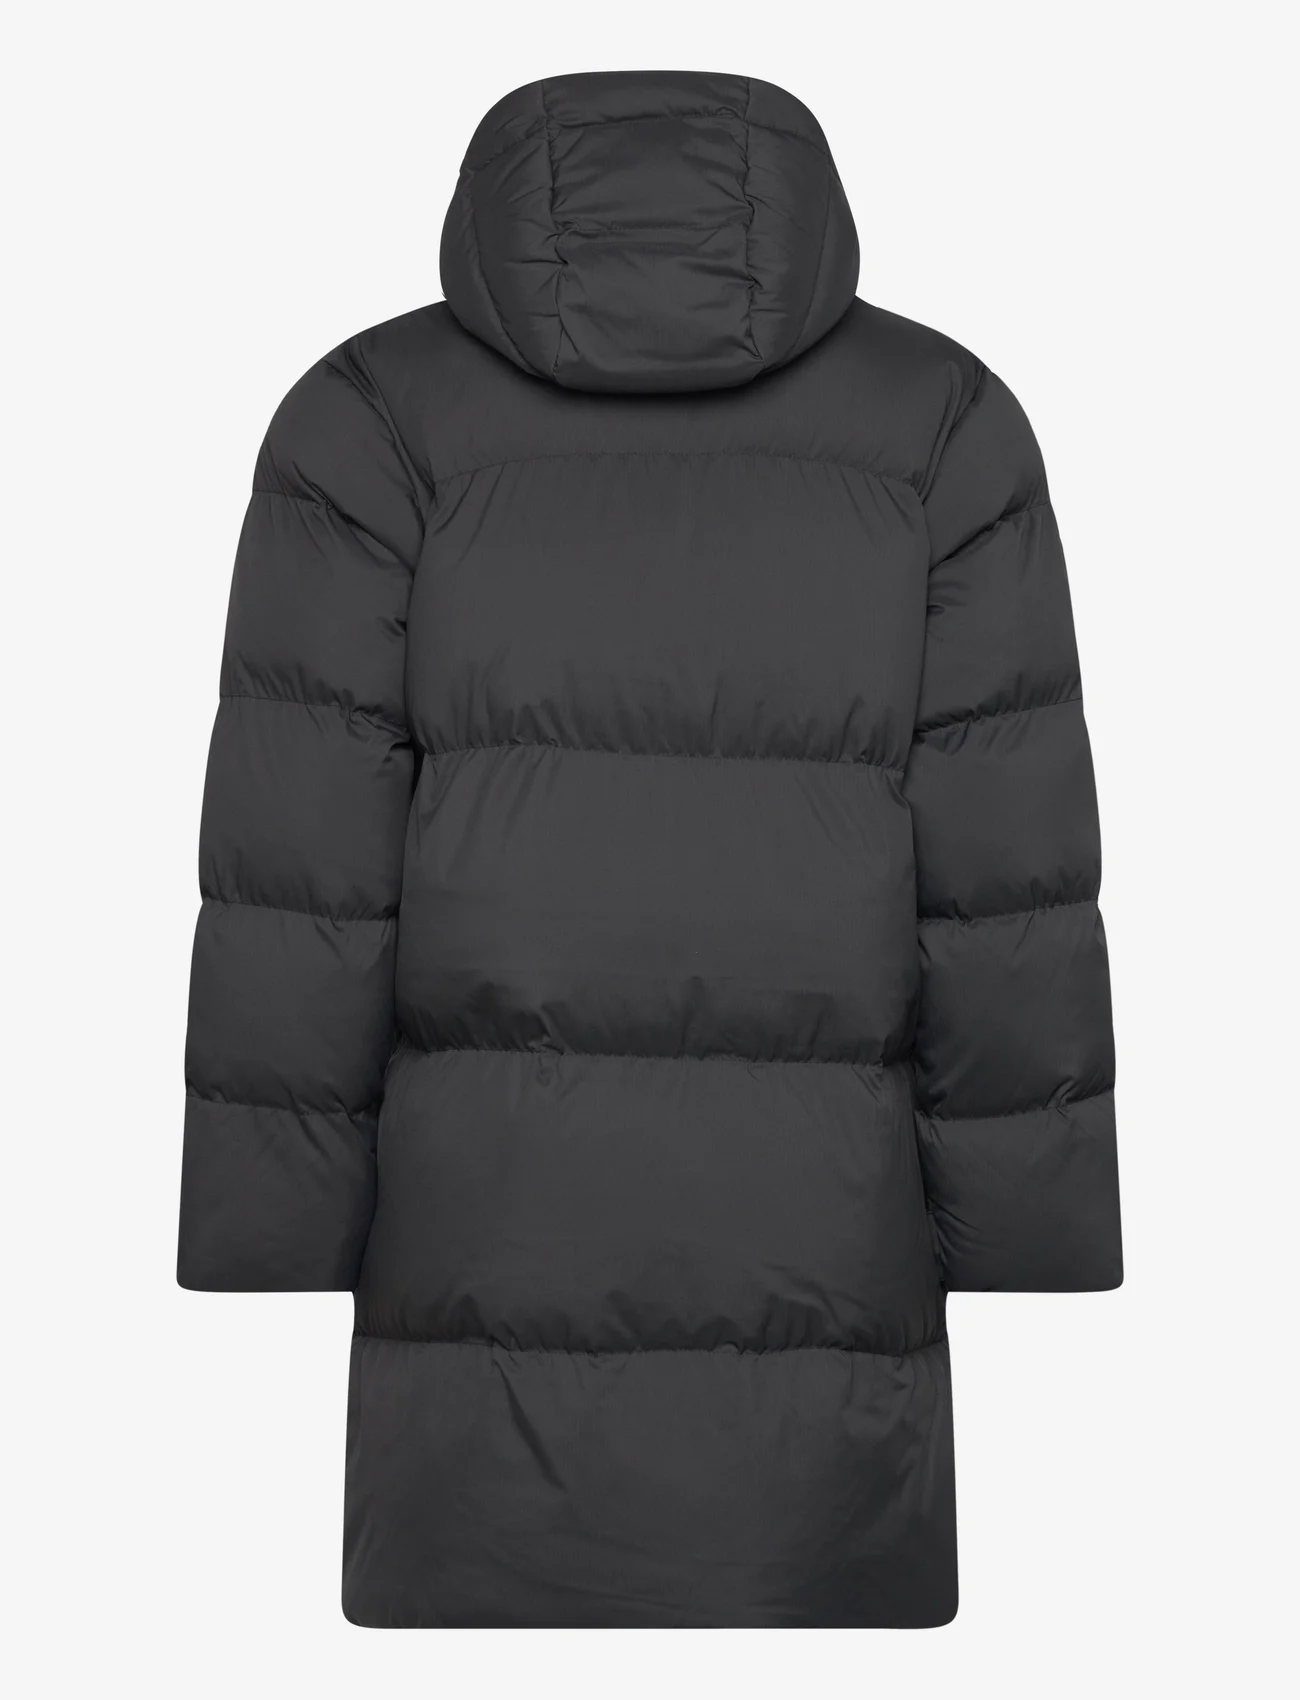 Casall - Wear Forever Puffer Coat - padded coats - black - 1